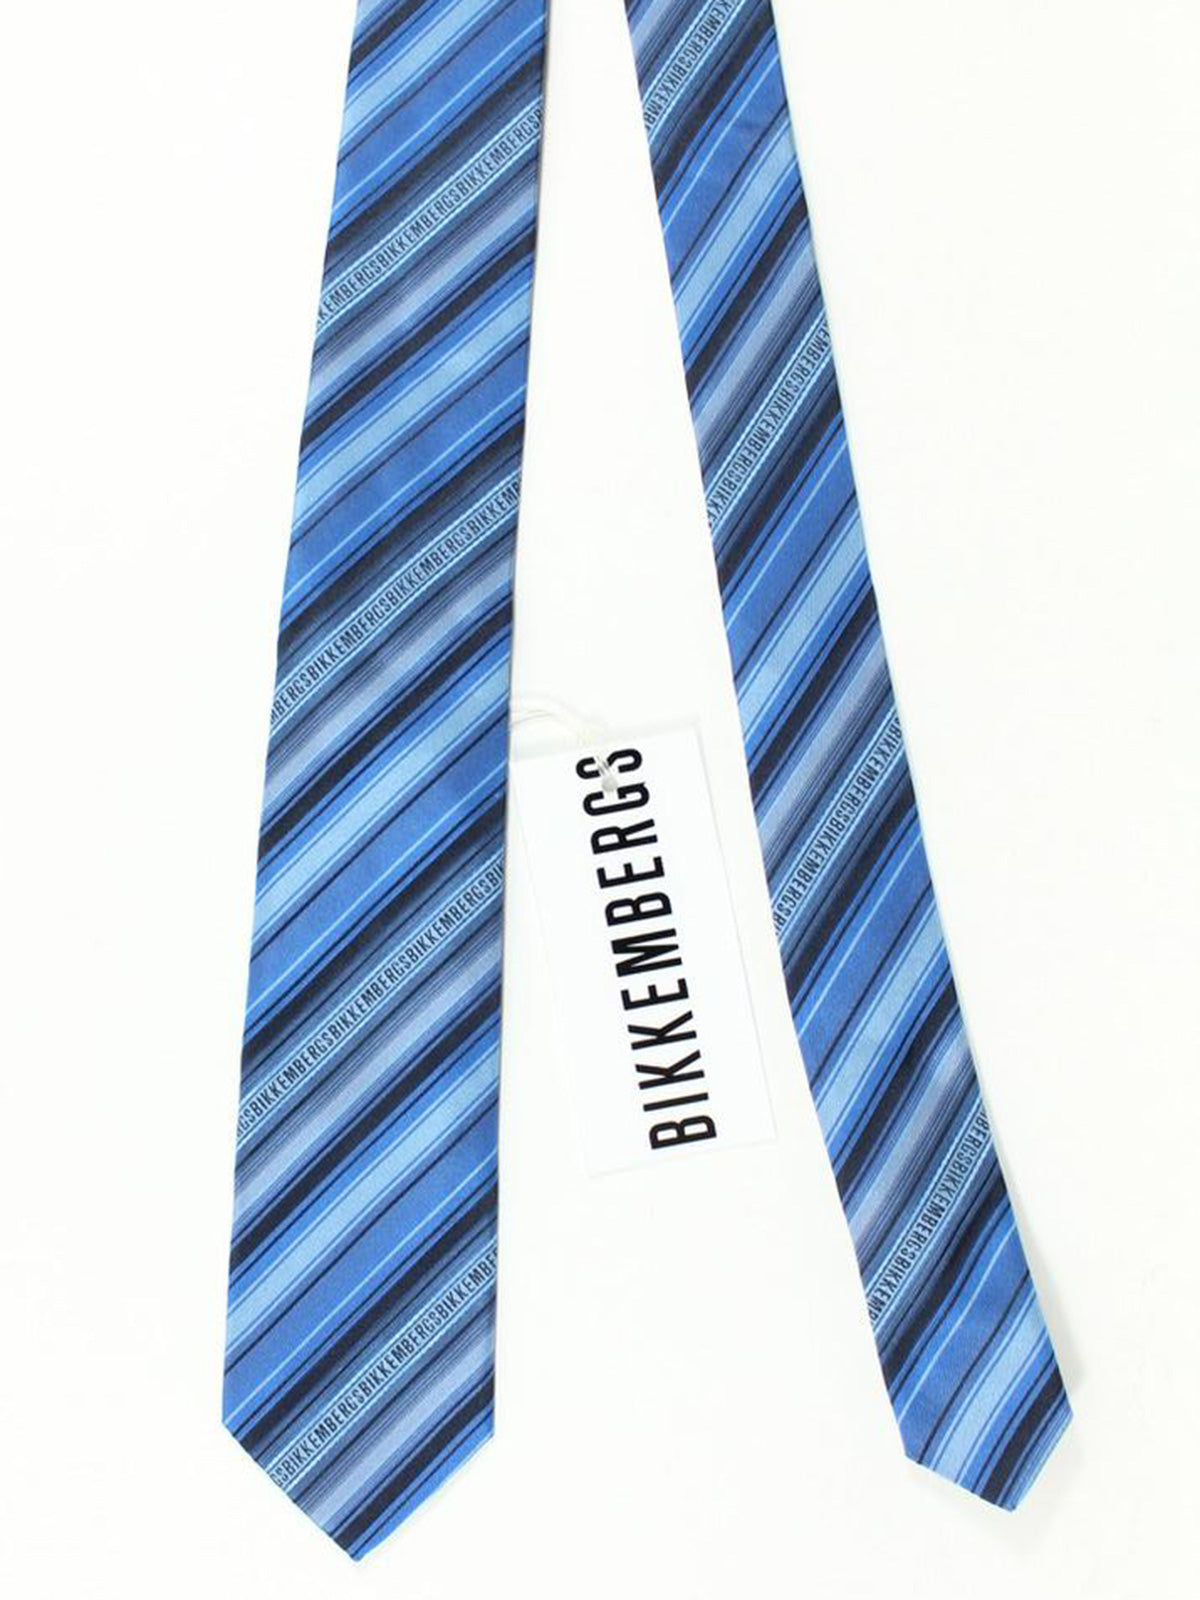 Bikkembergs Tie Blue Stripes Design